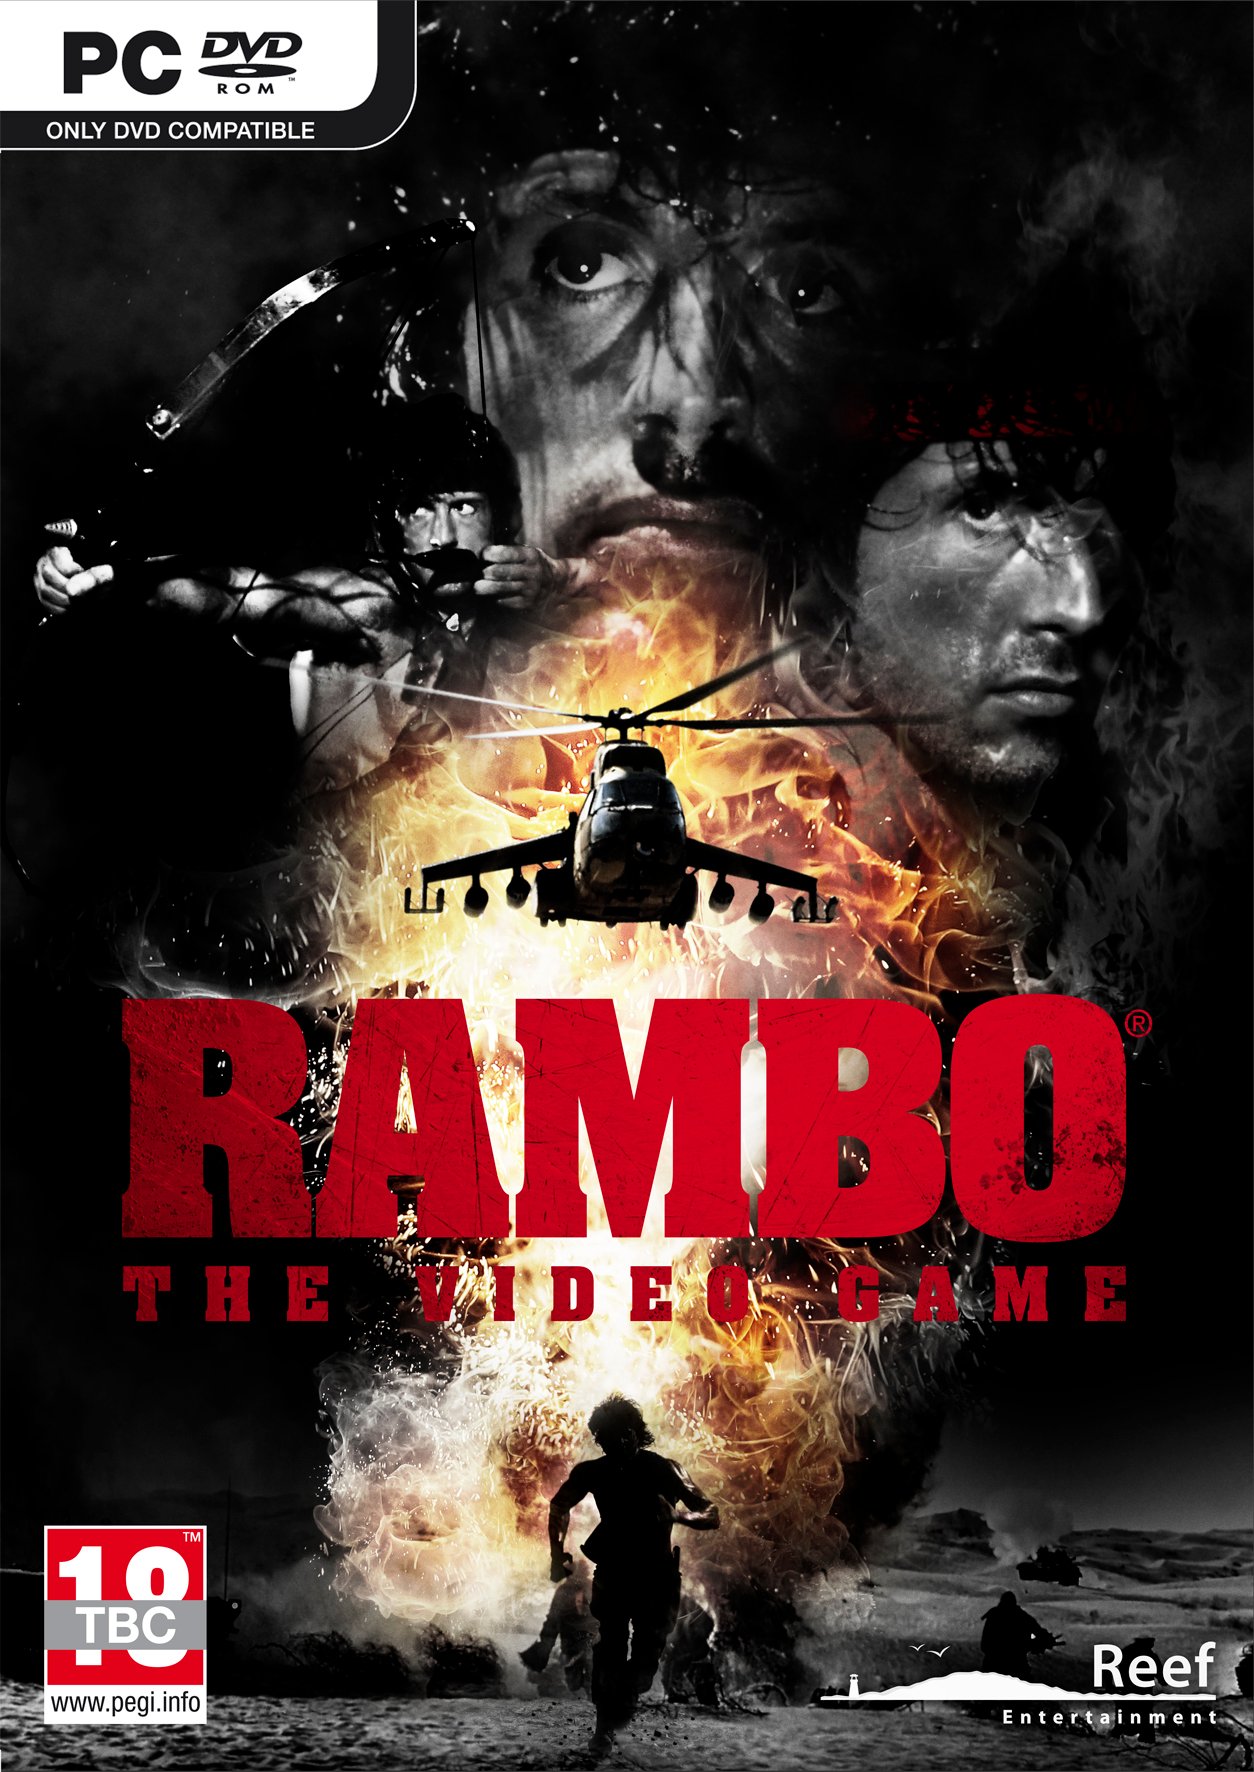 rambo 3 video game download free